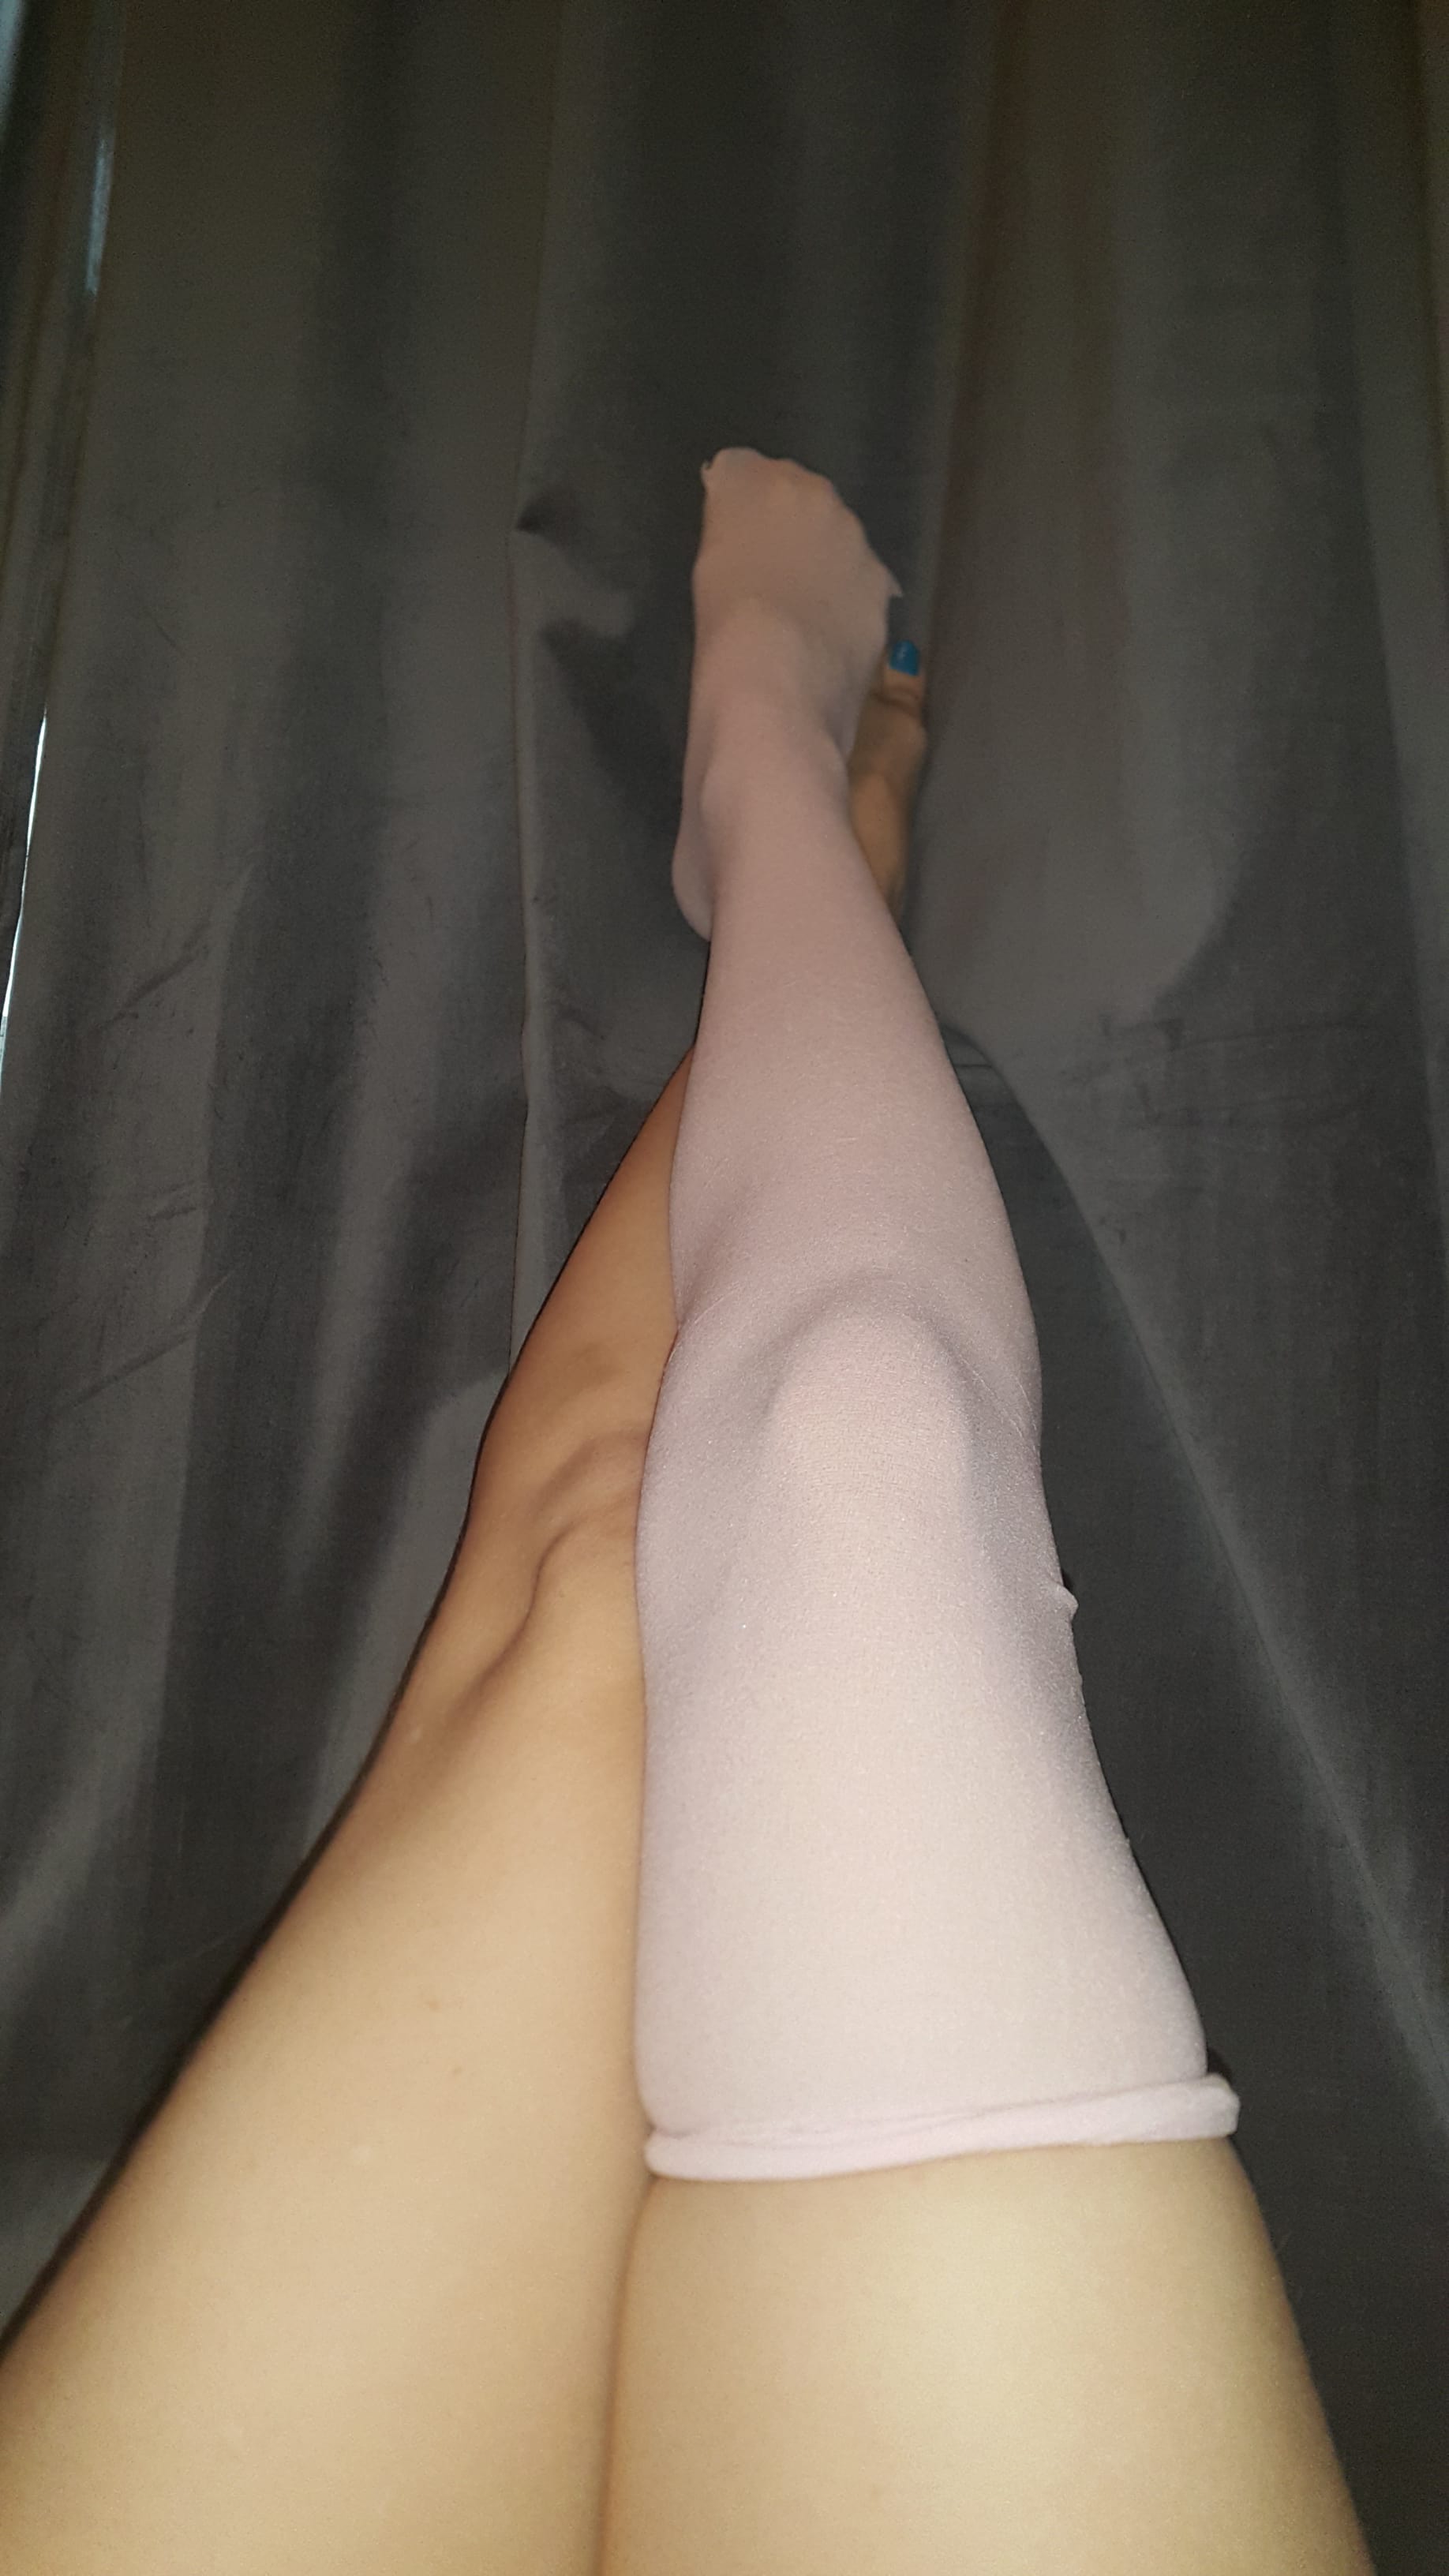 beatriz solano recommends cute thigh pics pic